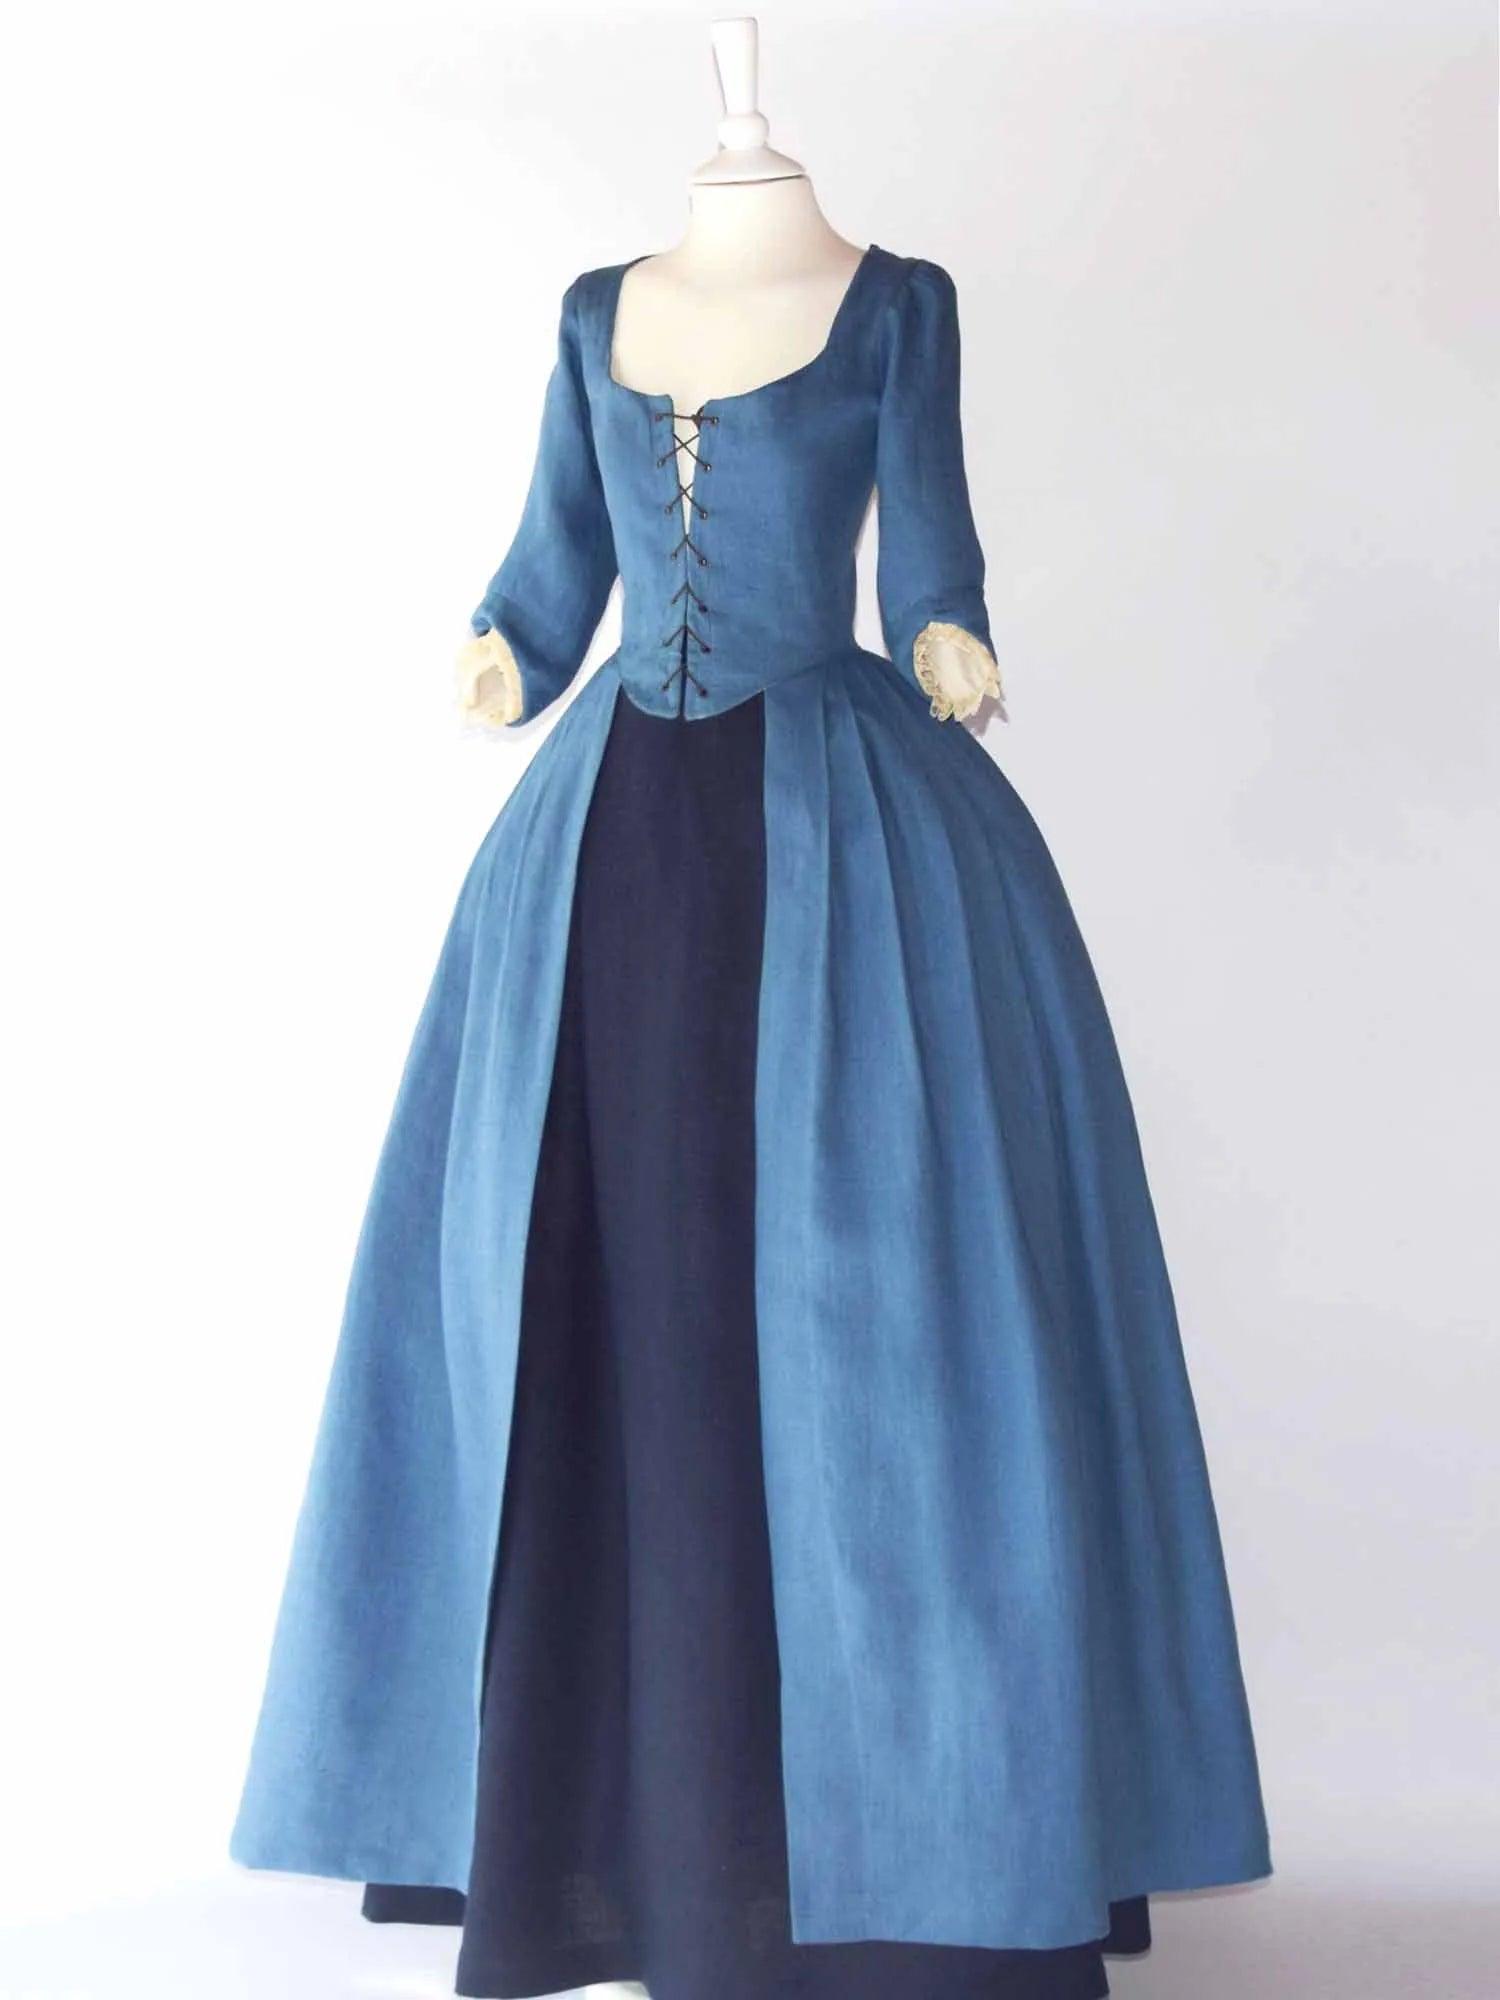 18th Century Overdress in Steel Blue Linen & Skirt - Atelier Serraspina